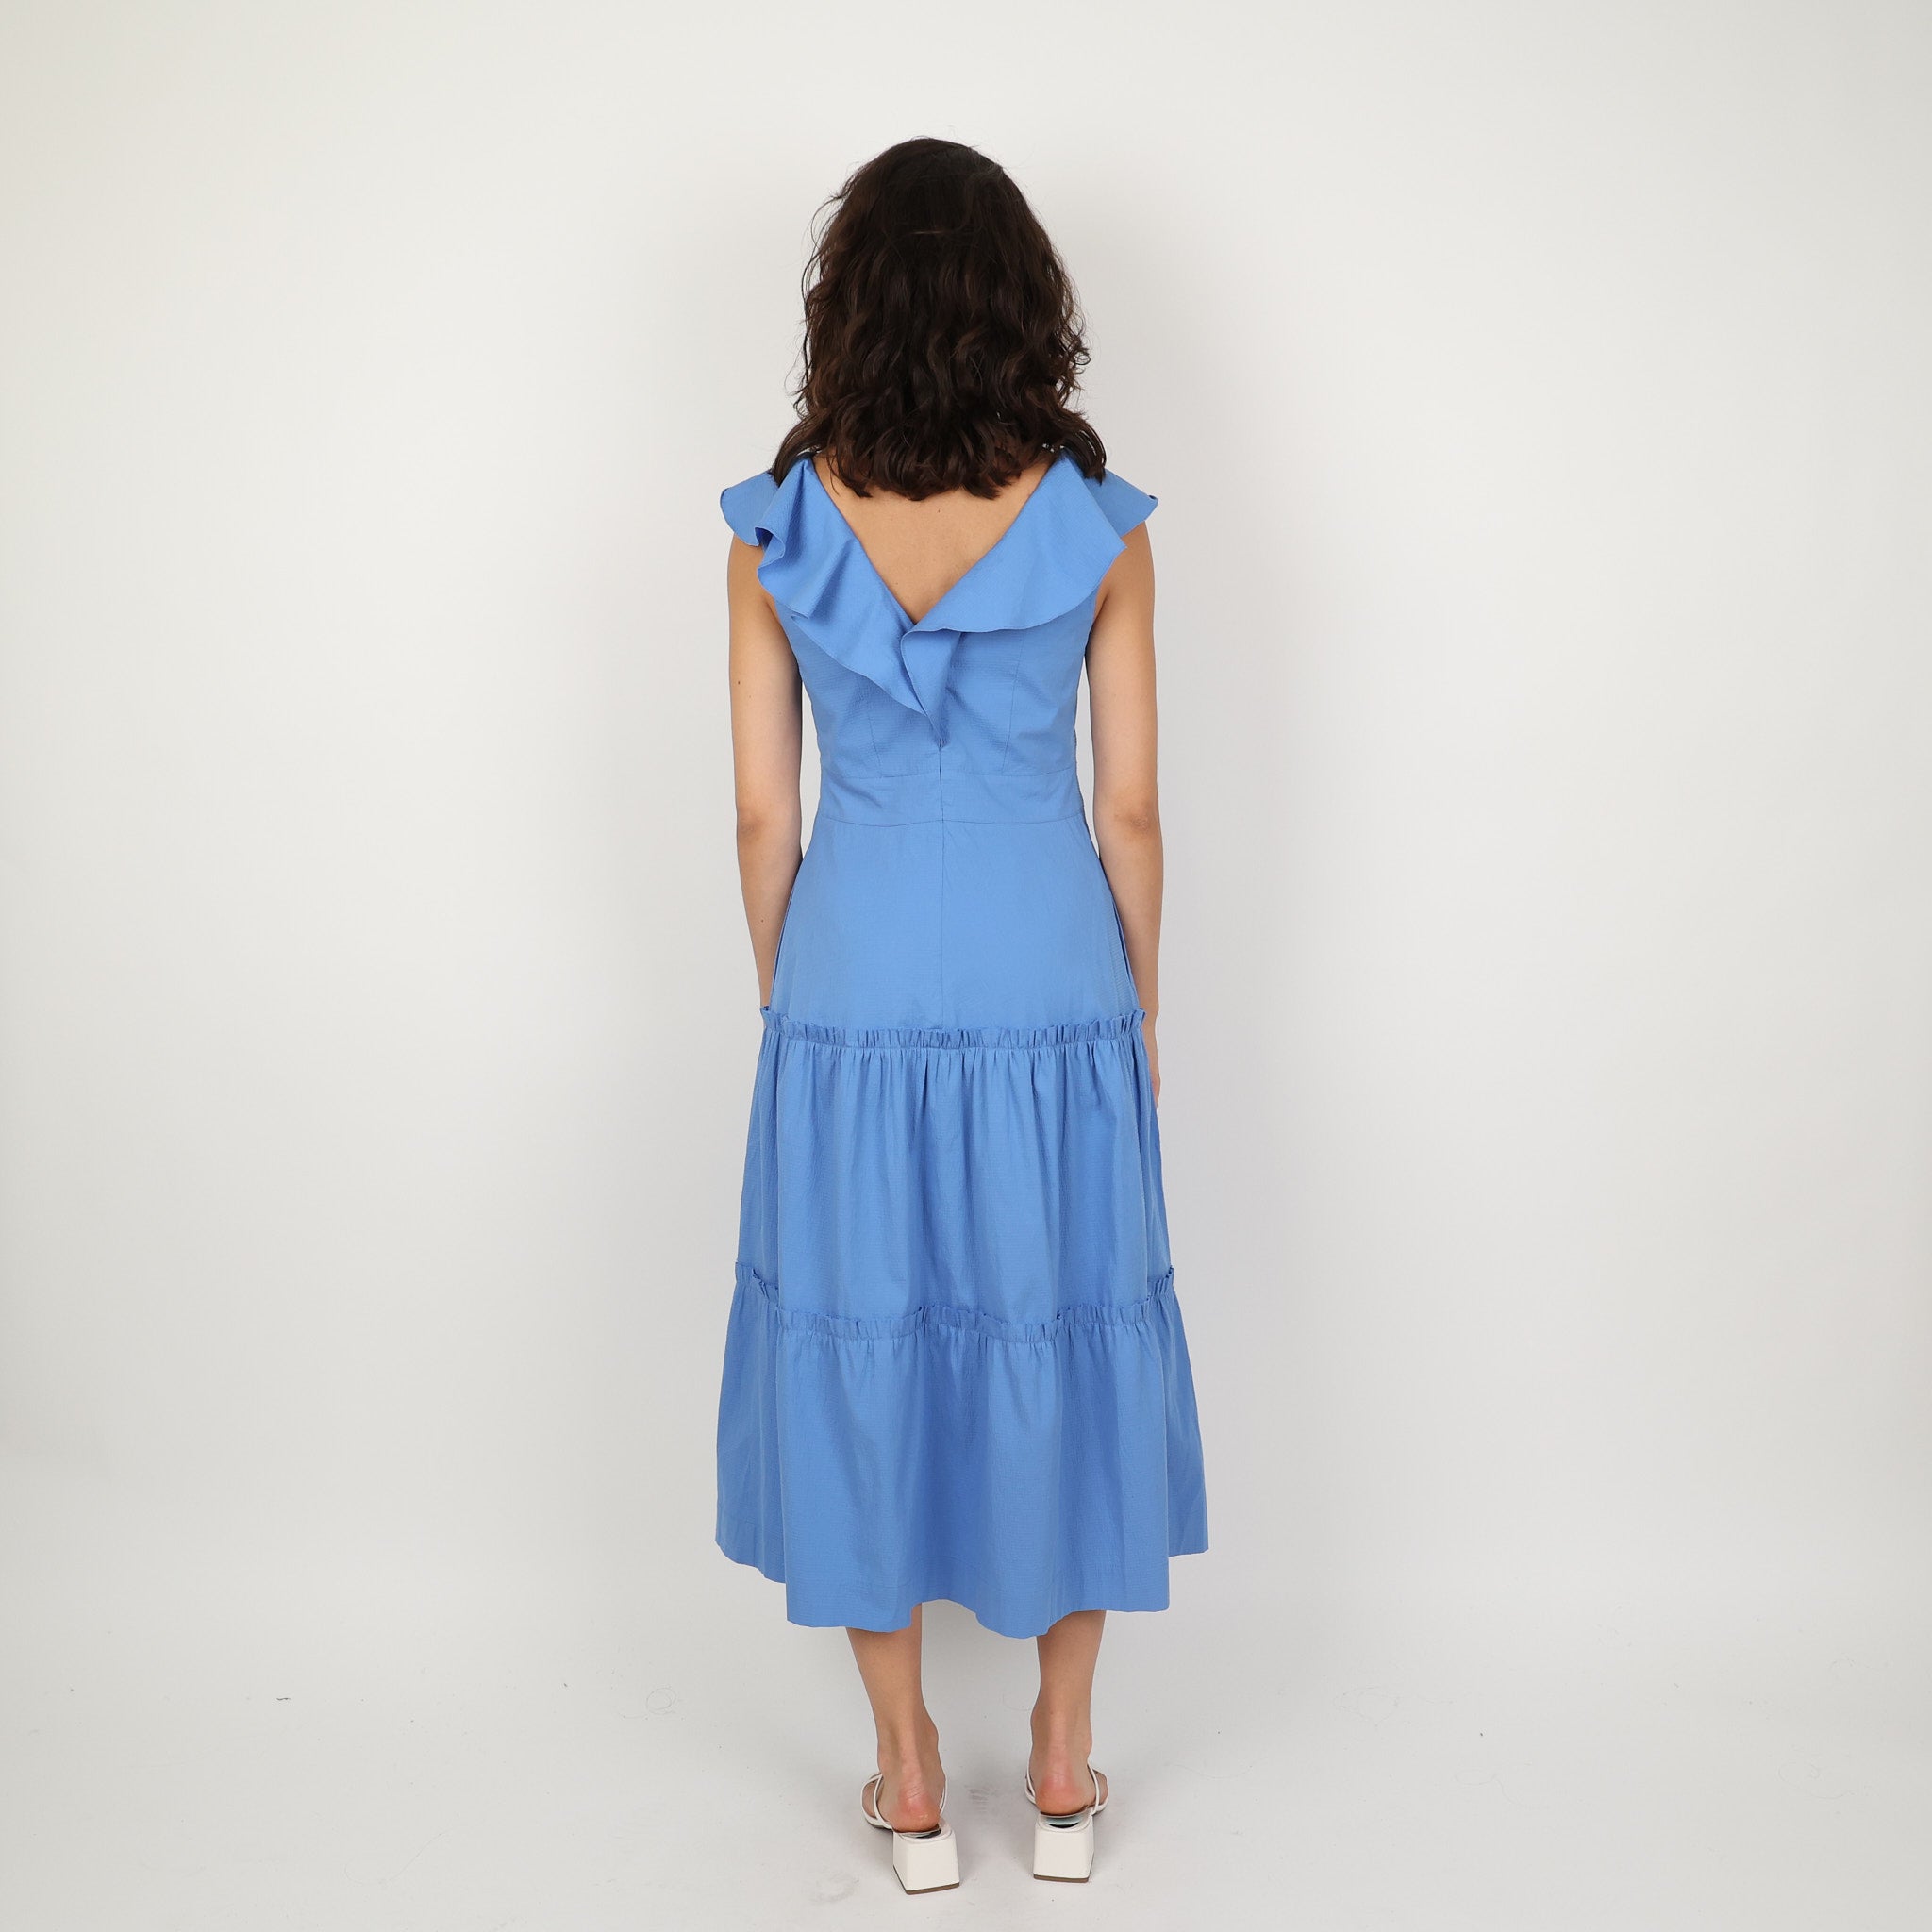 Dress, UK Size 6